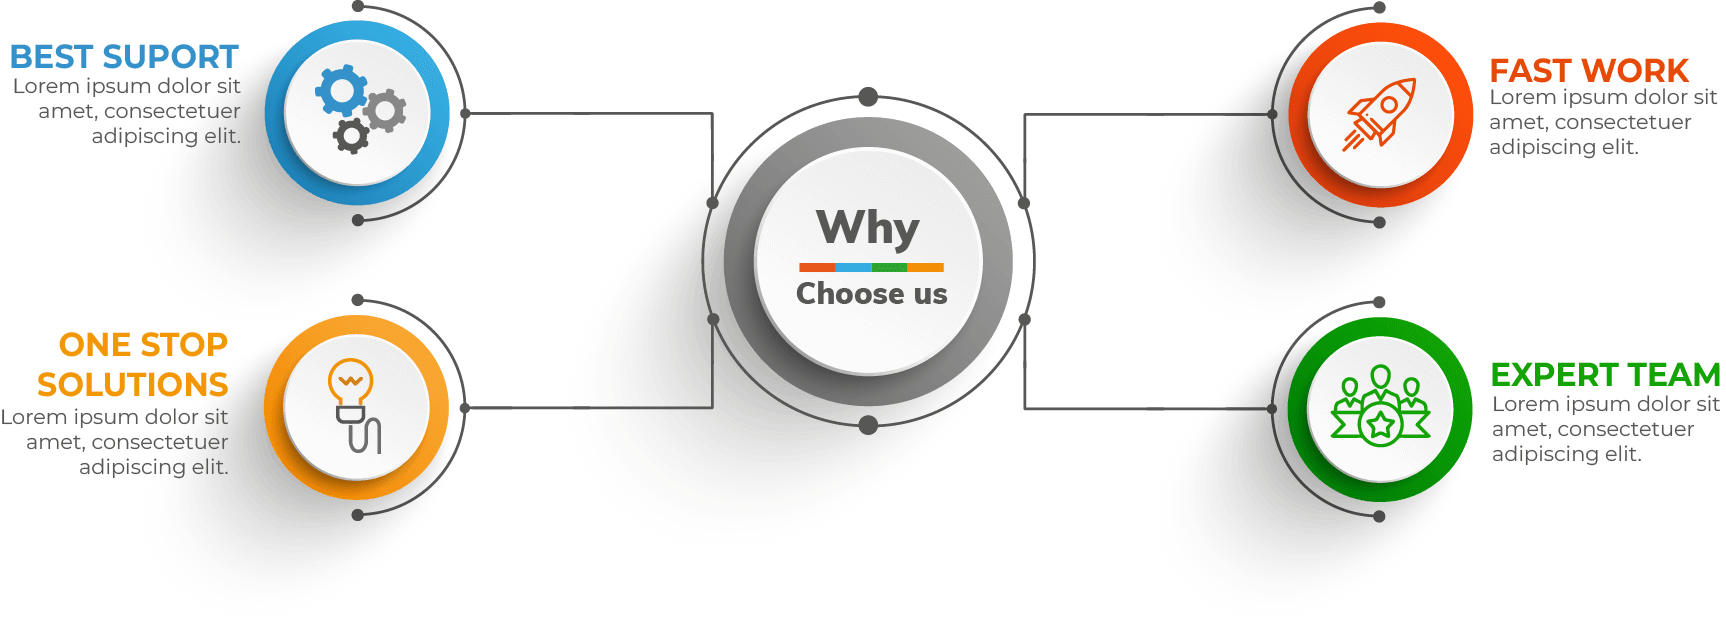 why choose us design